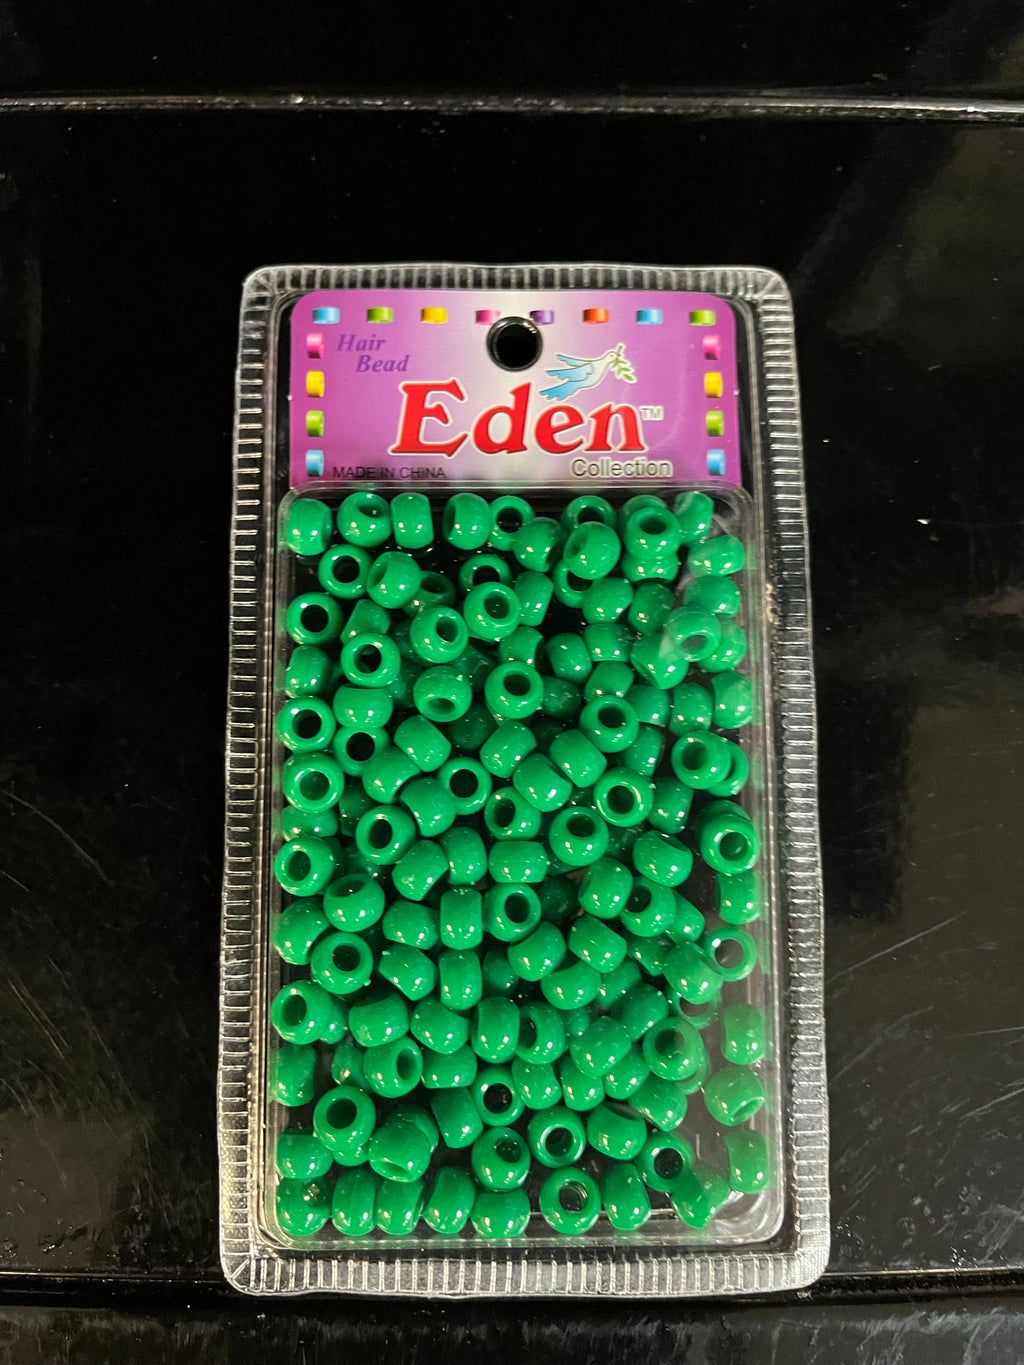 Eden Clear beads – NY Hair & Beauty Warehouse Inc.